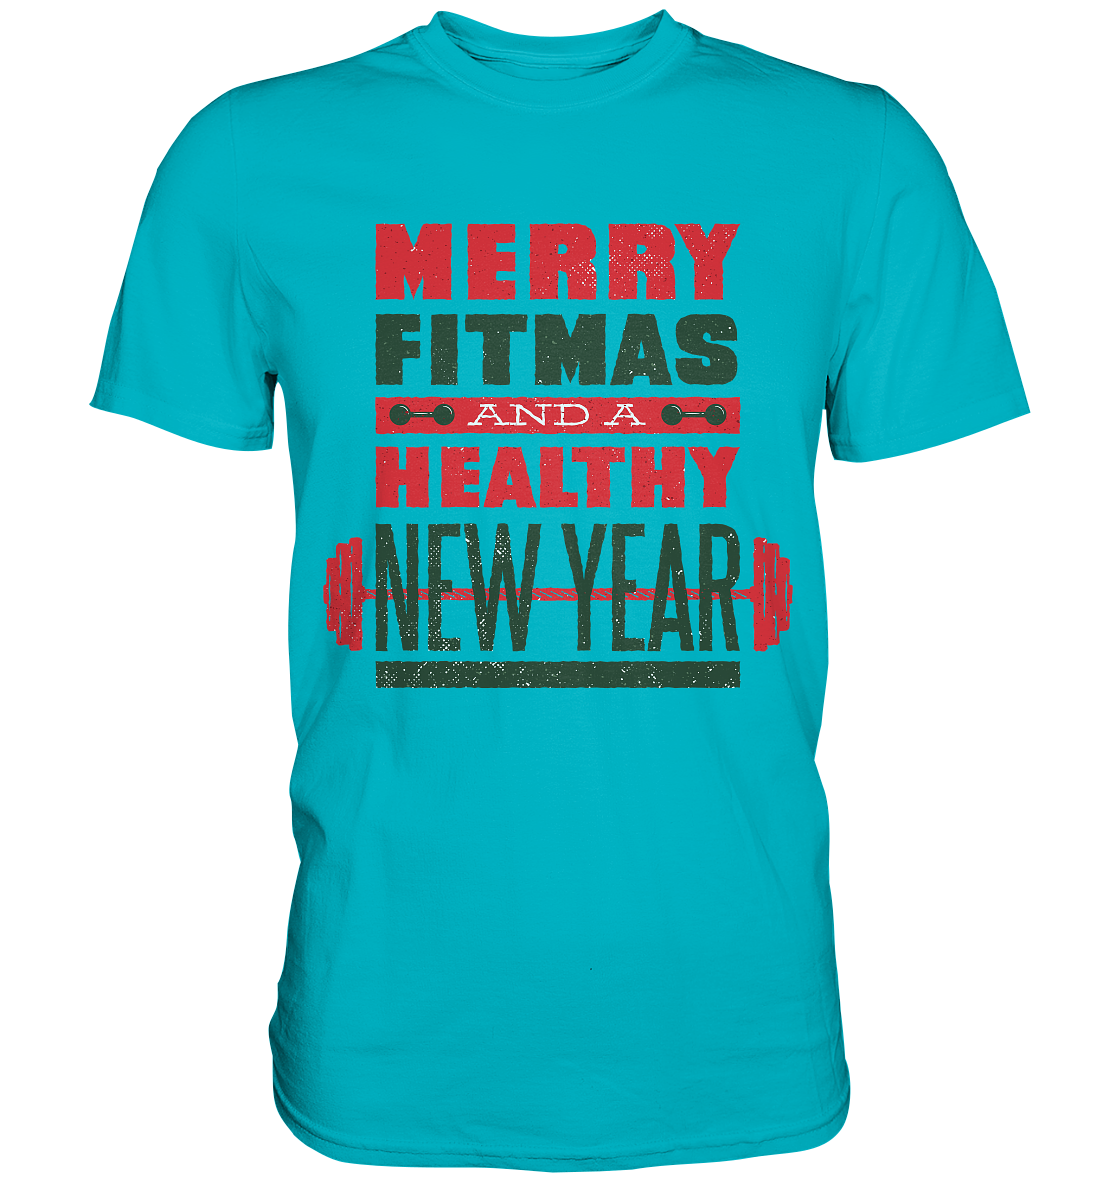 Weihnachtliches Design, Gym, Merry Fitmas and a Healthy New Year - Premium Shirt